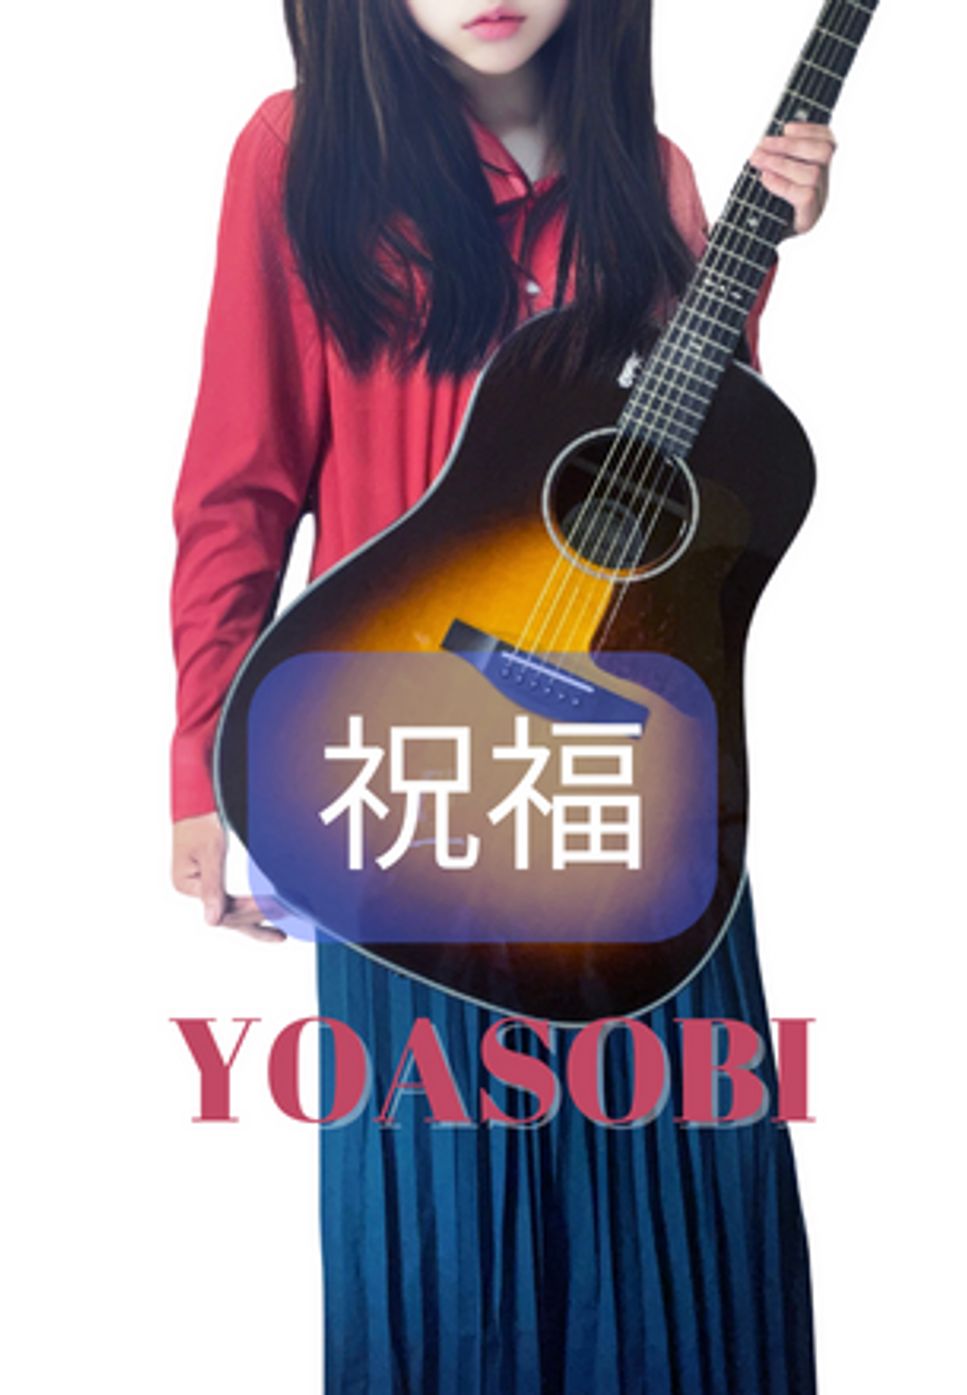 YOASOBI - 祝福 (ソロギターtab) by kaede